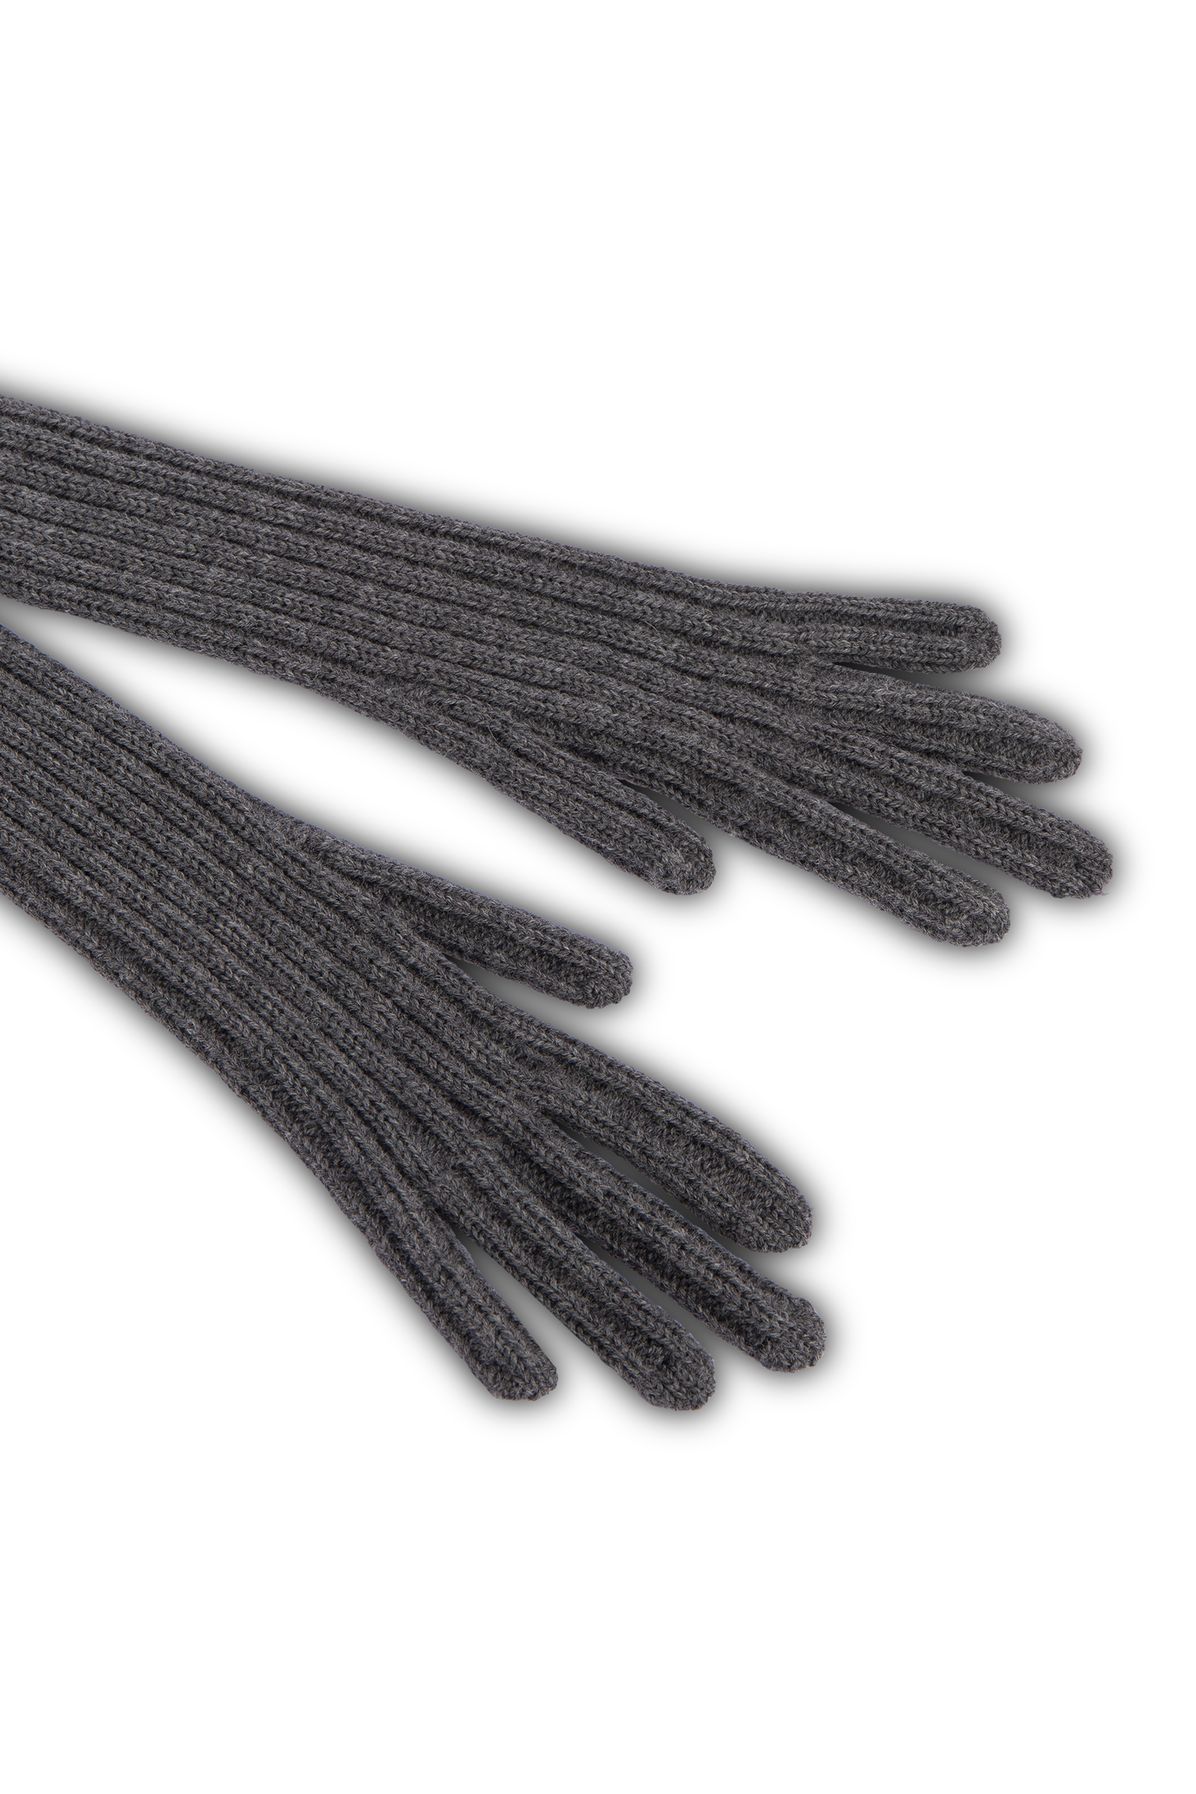 Alberta Ferretti Long wool gloves